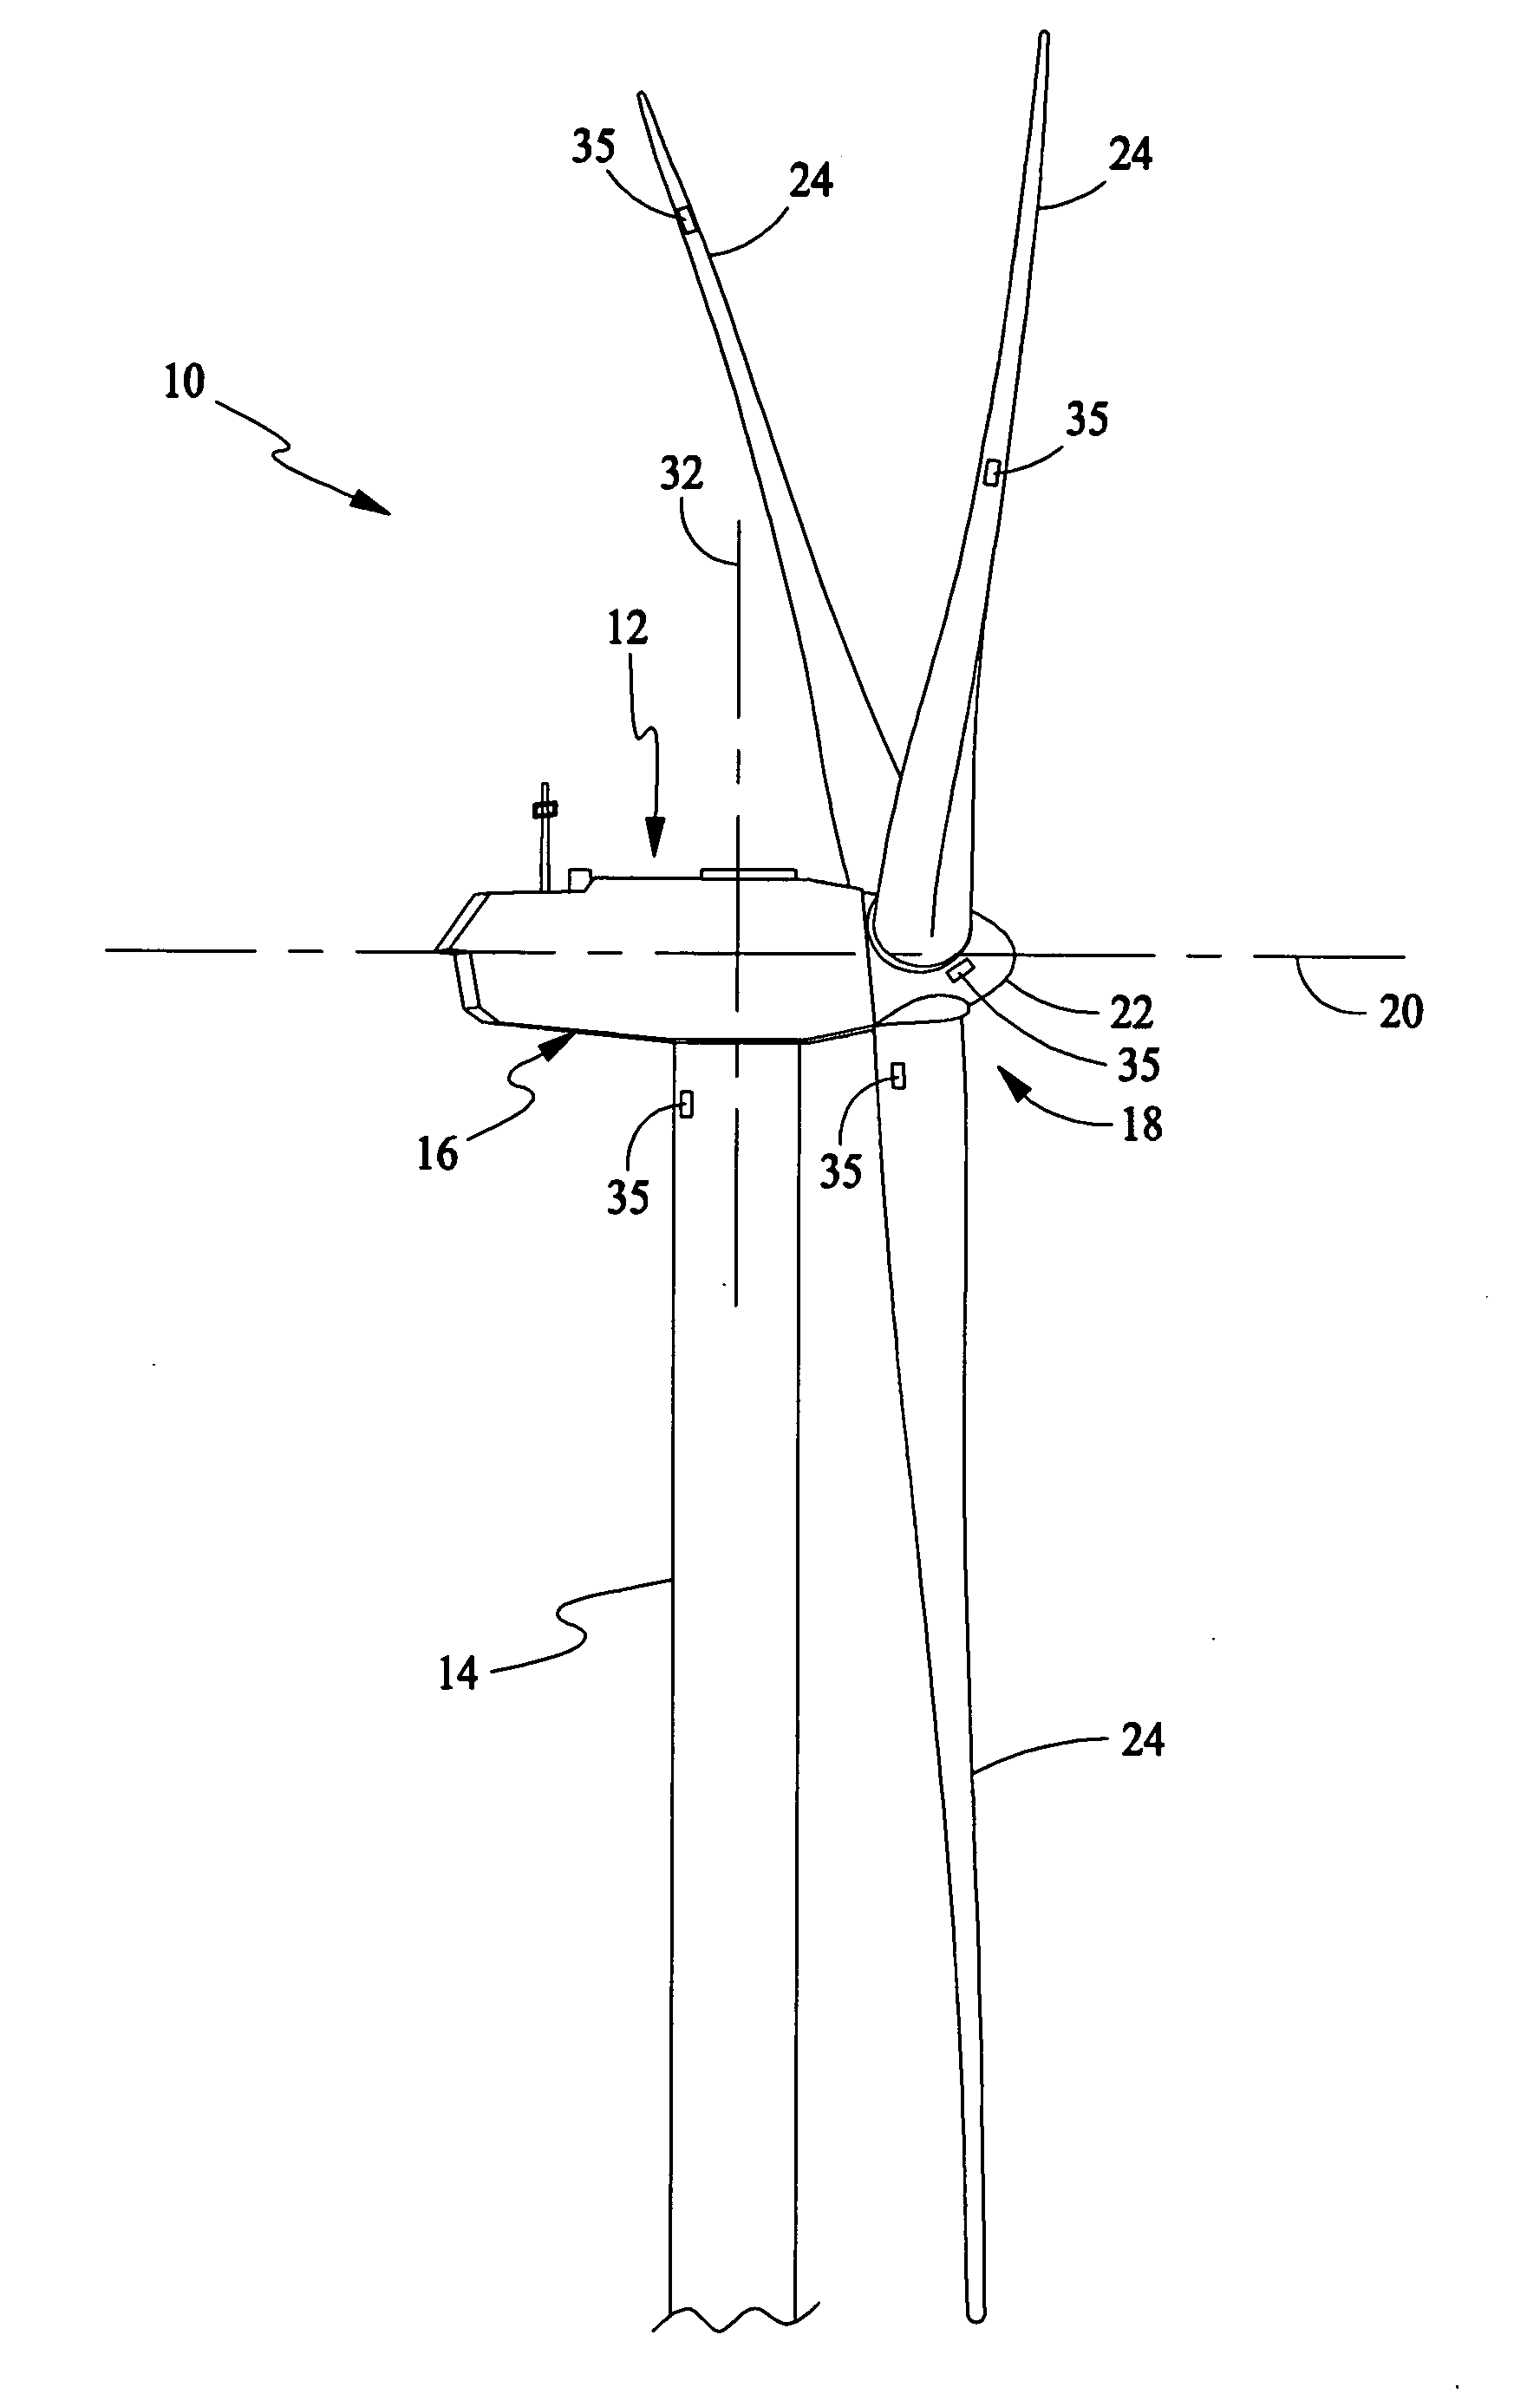 Method and apparatus for wind turbine braking